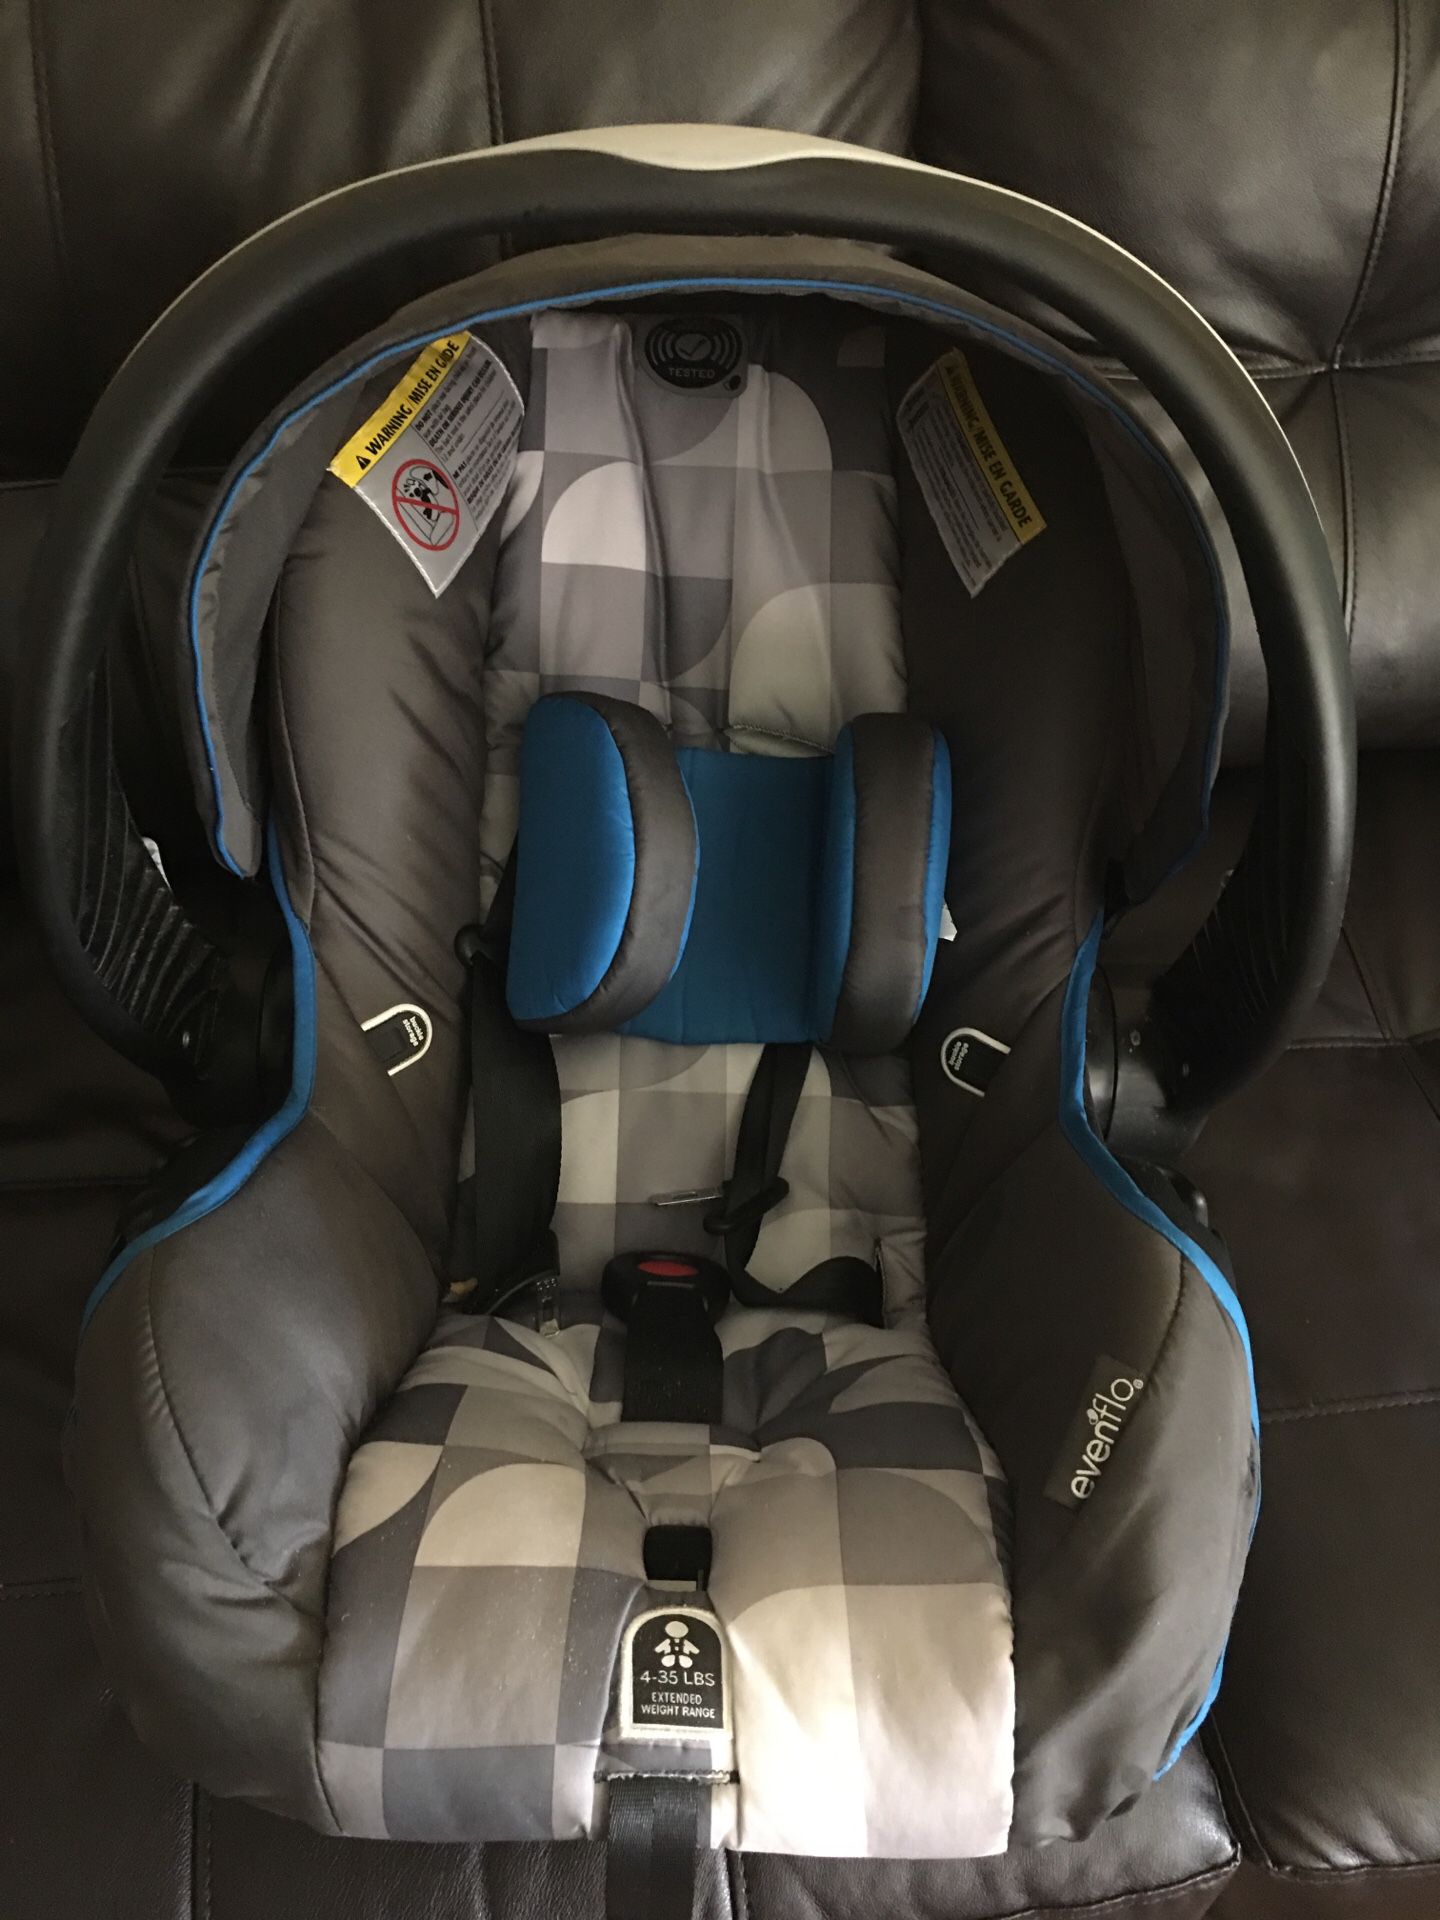 Baby boy car seat lightly used no damages